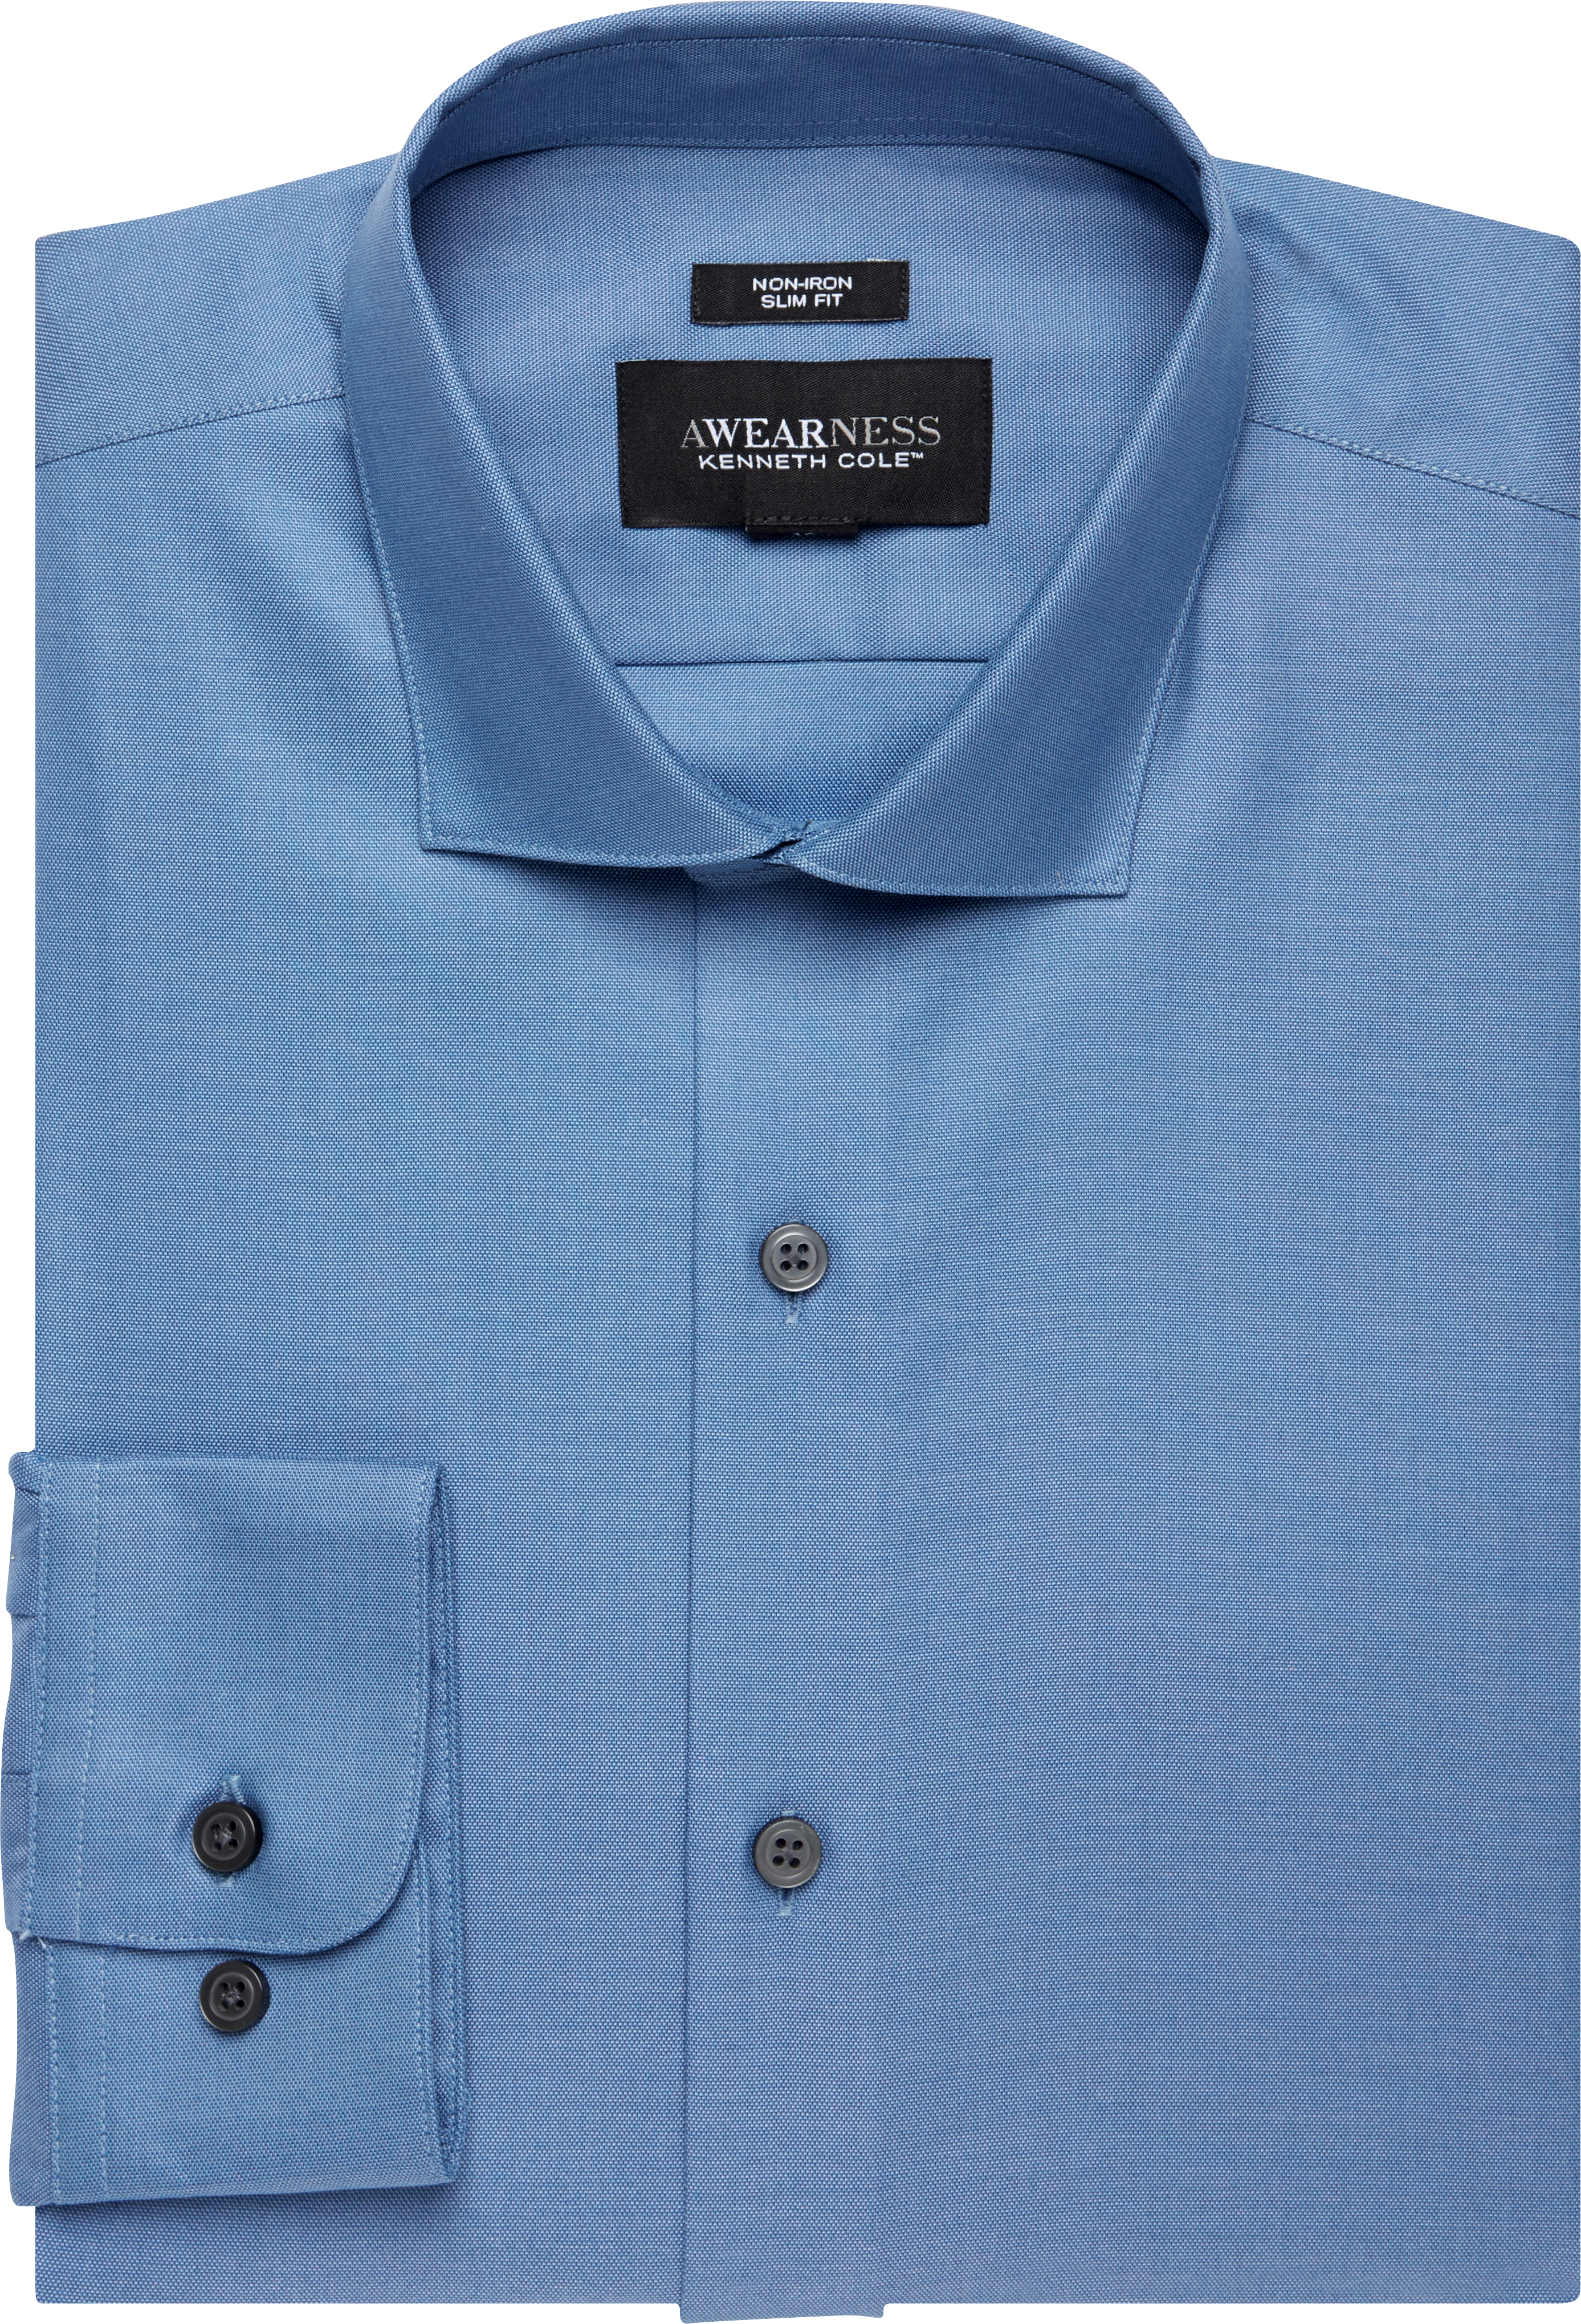 Awearness Kenneth Cole Sky Blue Slim Fit Dress Shirt - Men's Sale | Men ...